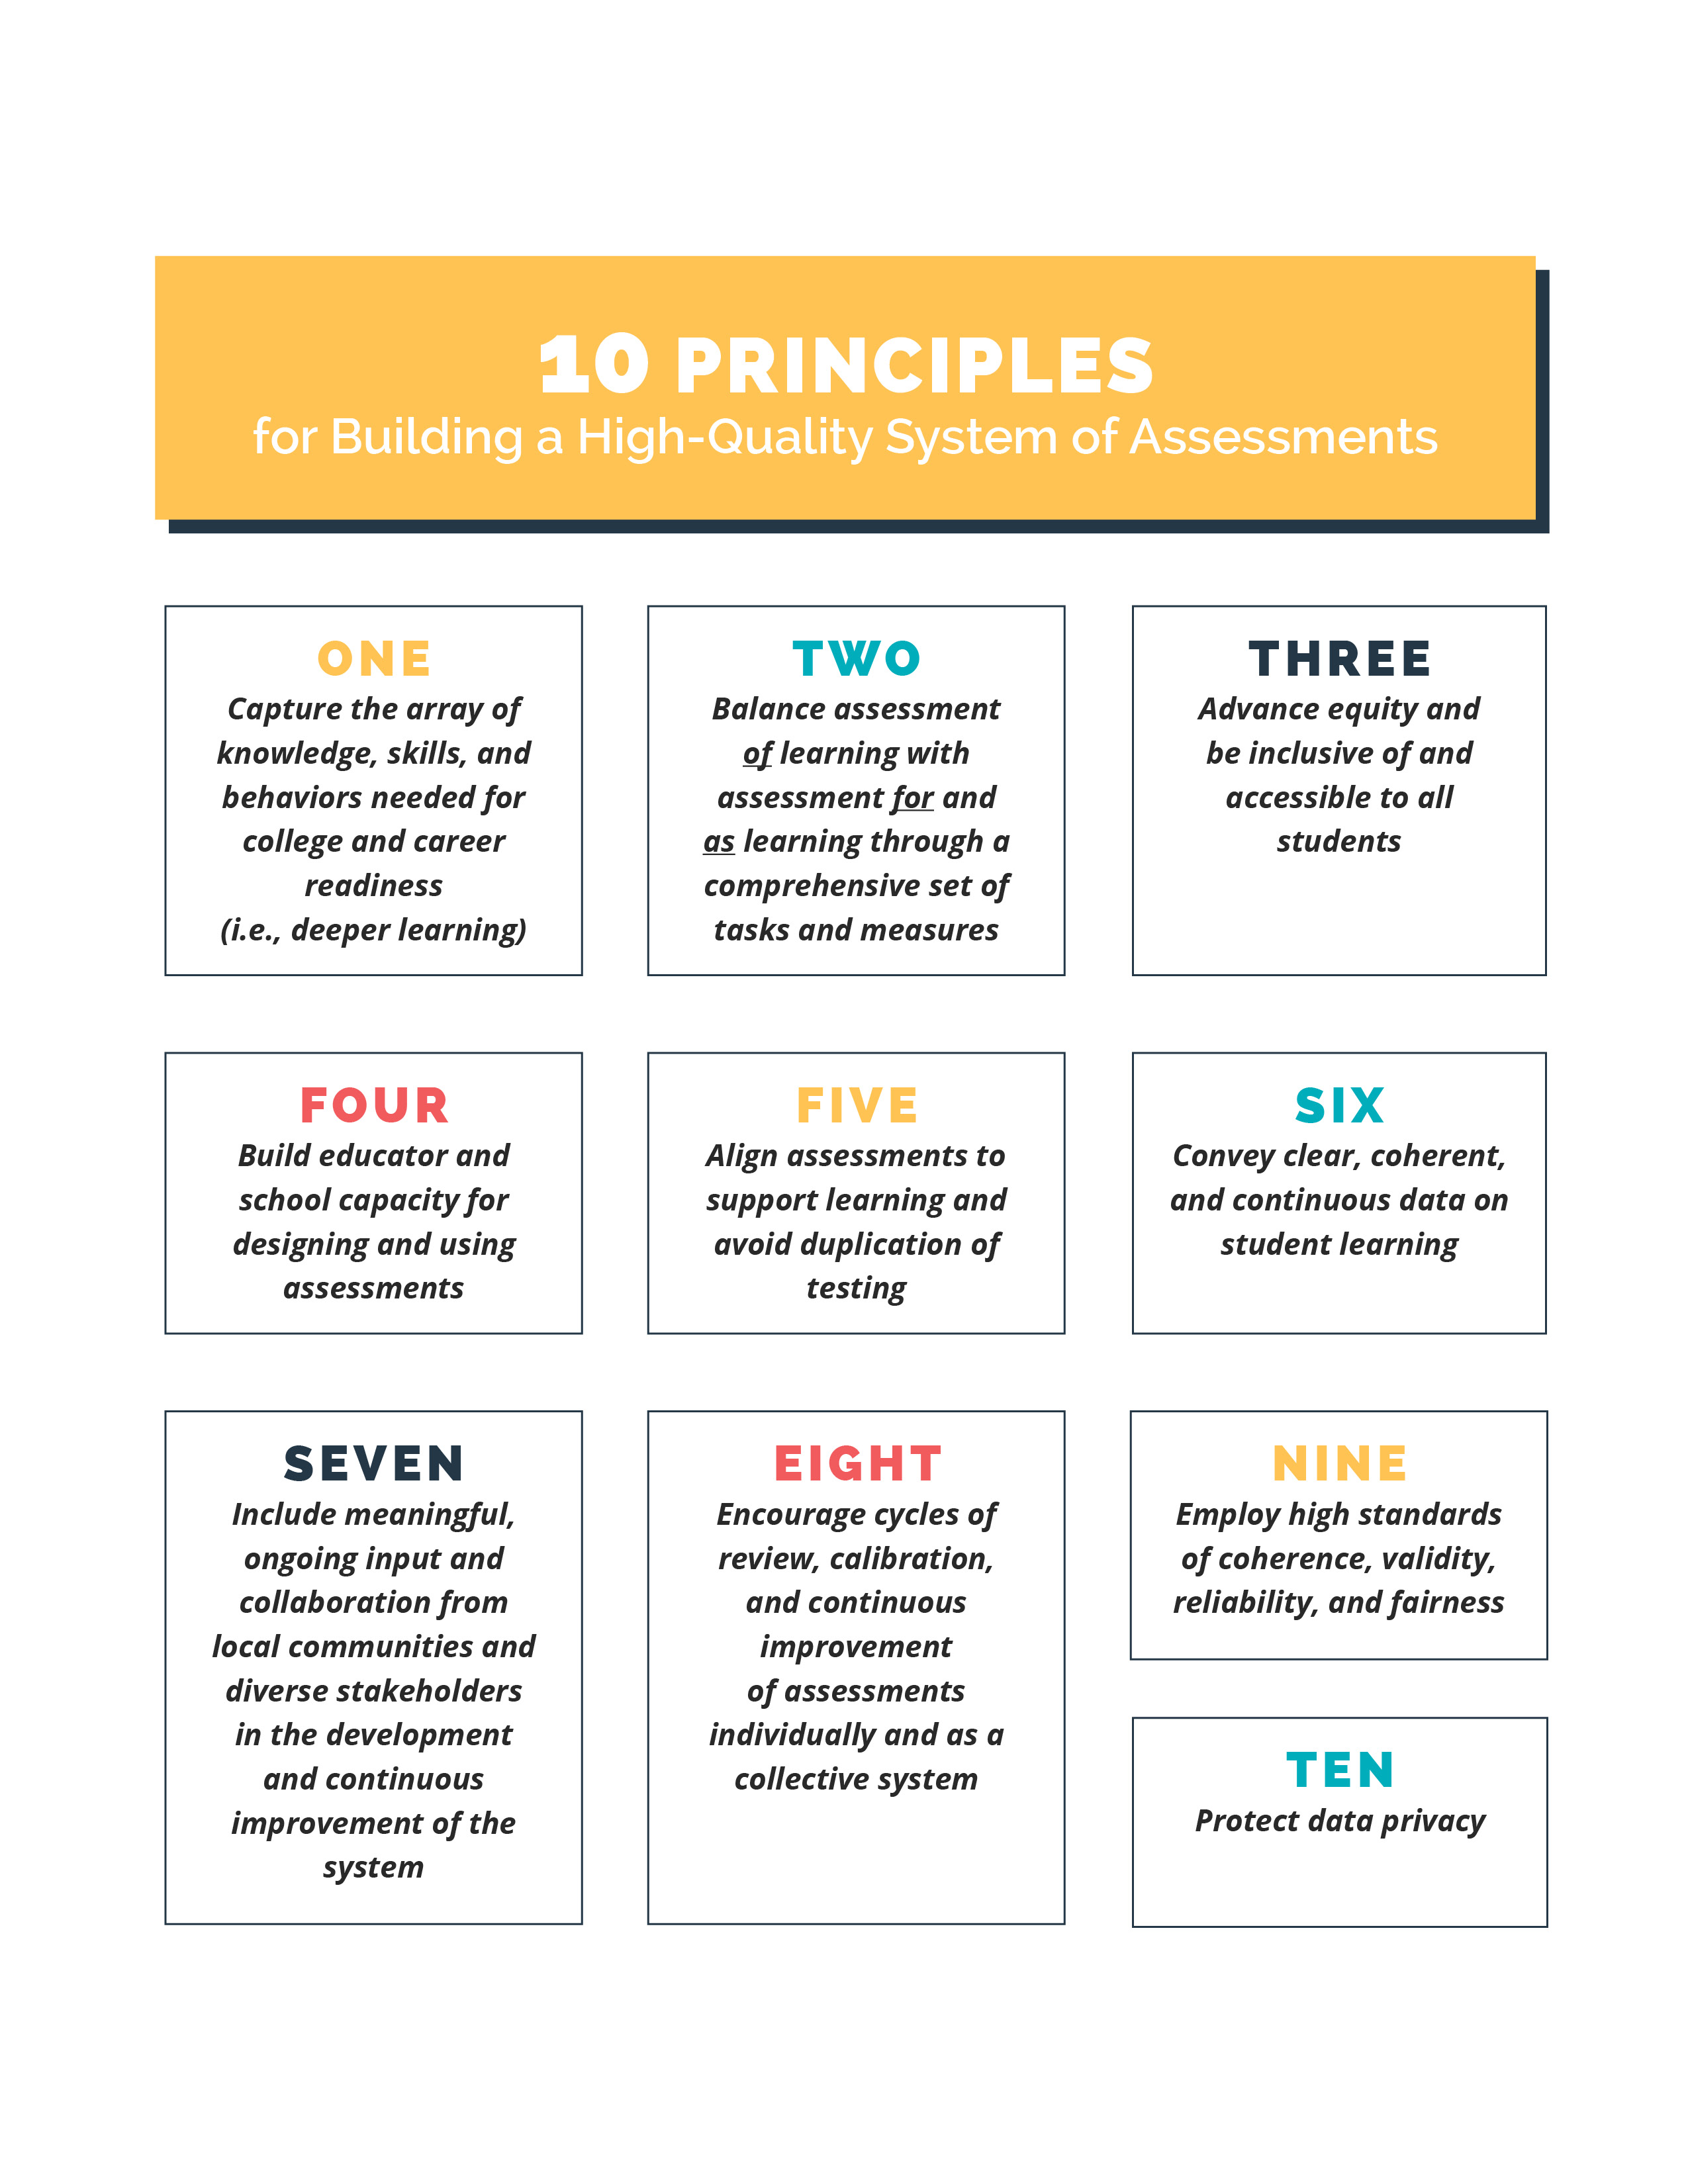 10 Principles Image